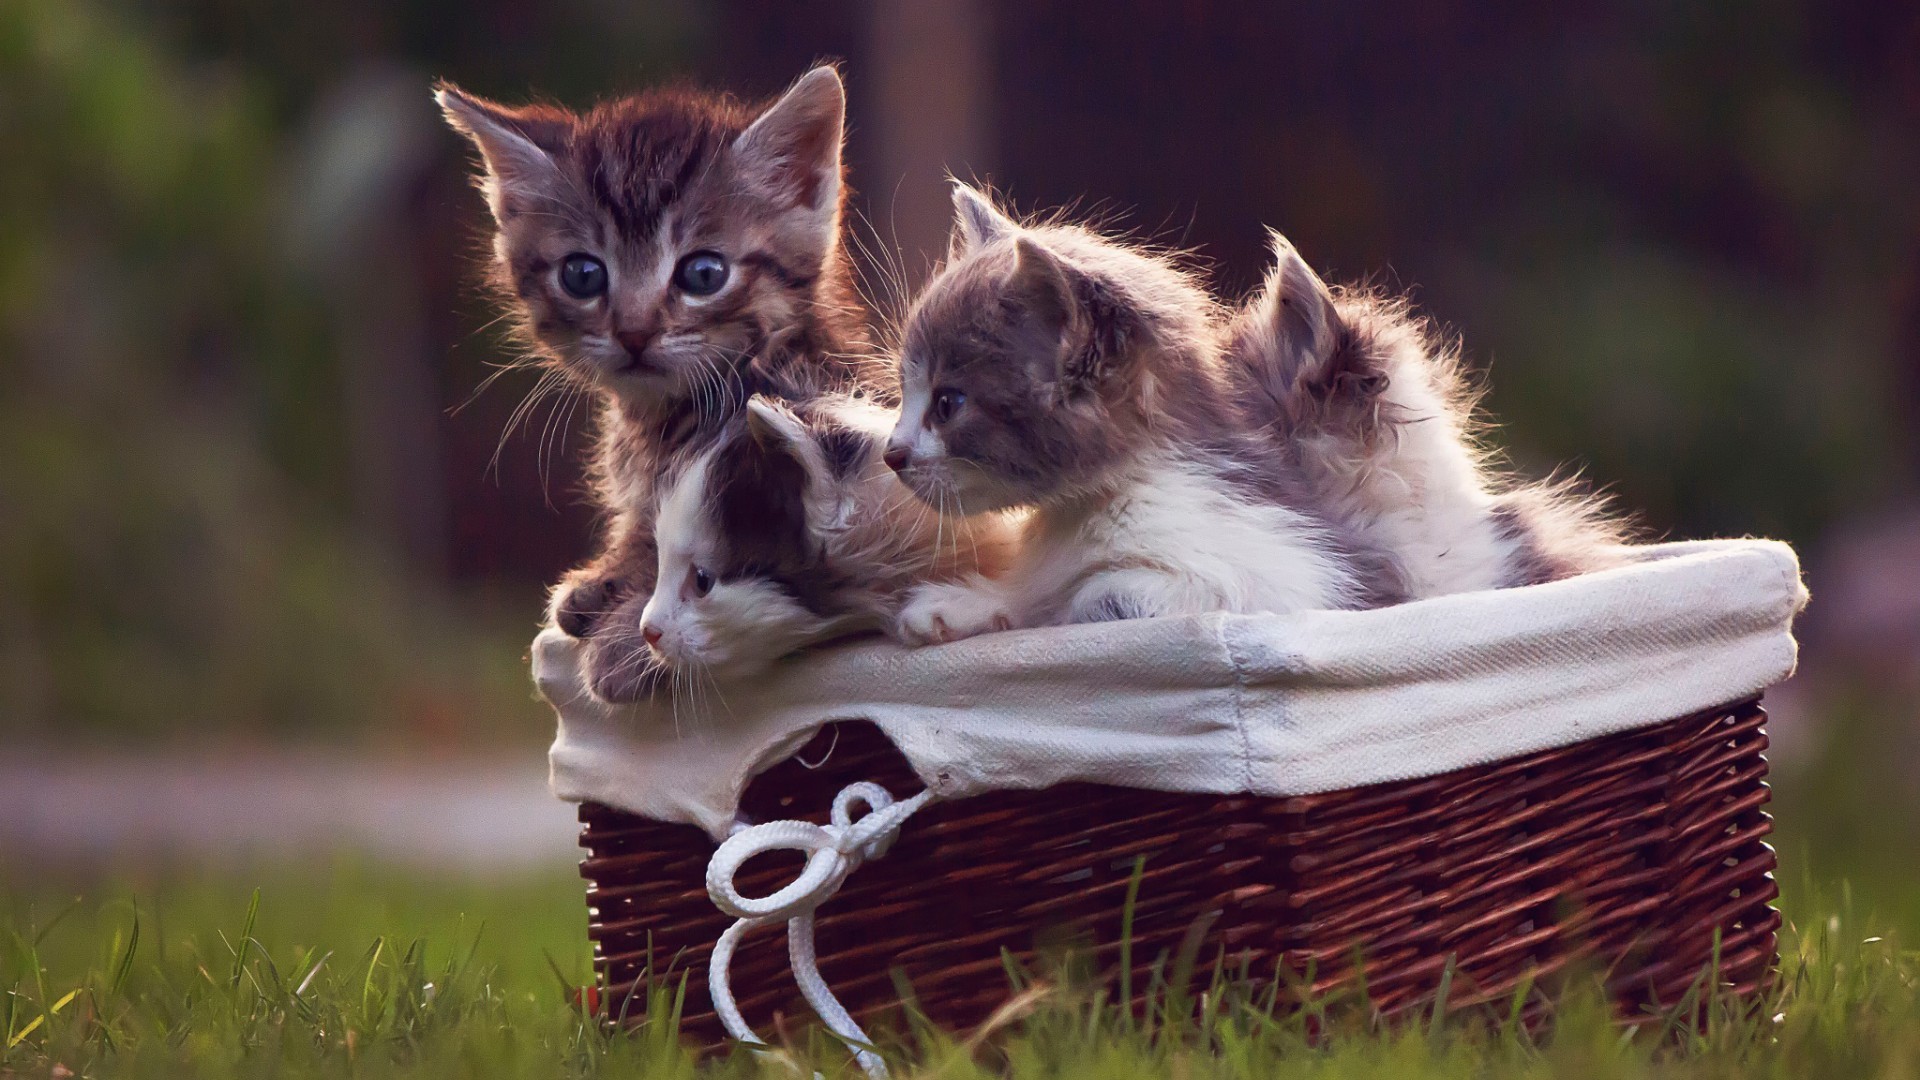 General 1920x1080 kittens cats baby animals baskets grass animals mammals outdoors